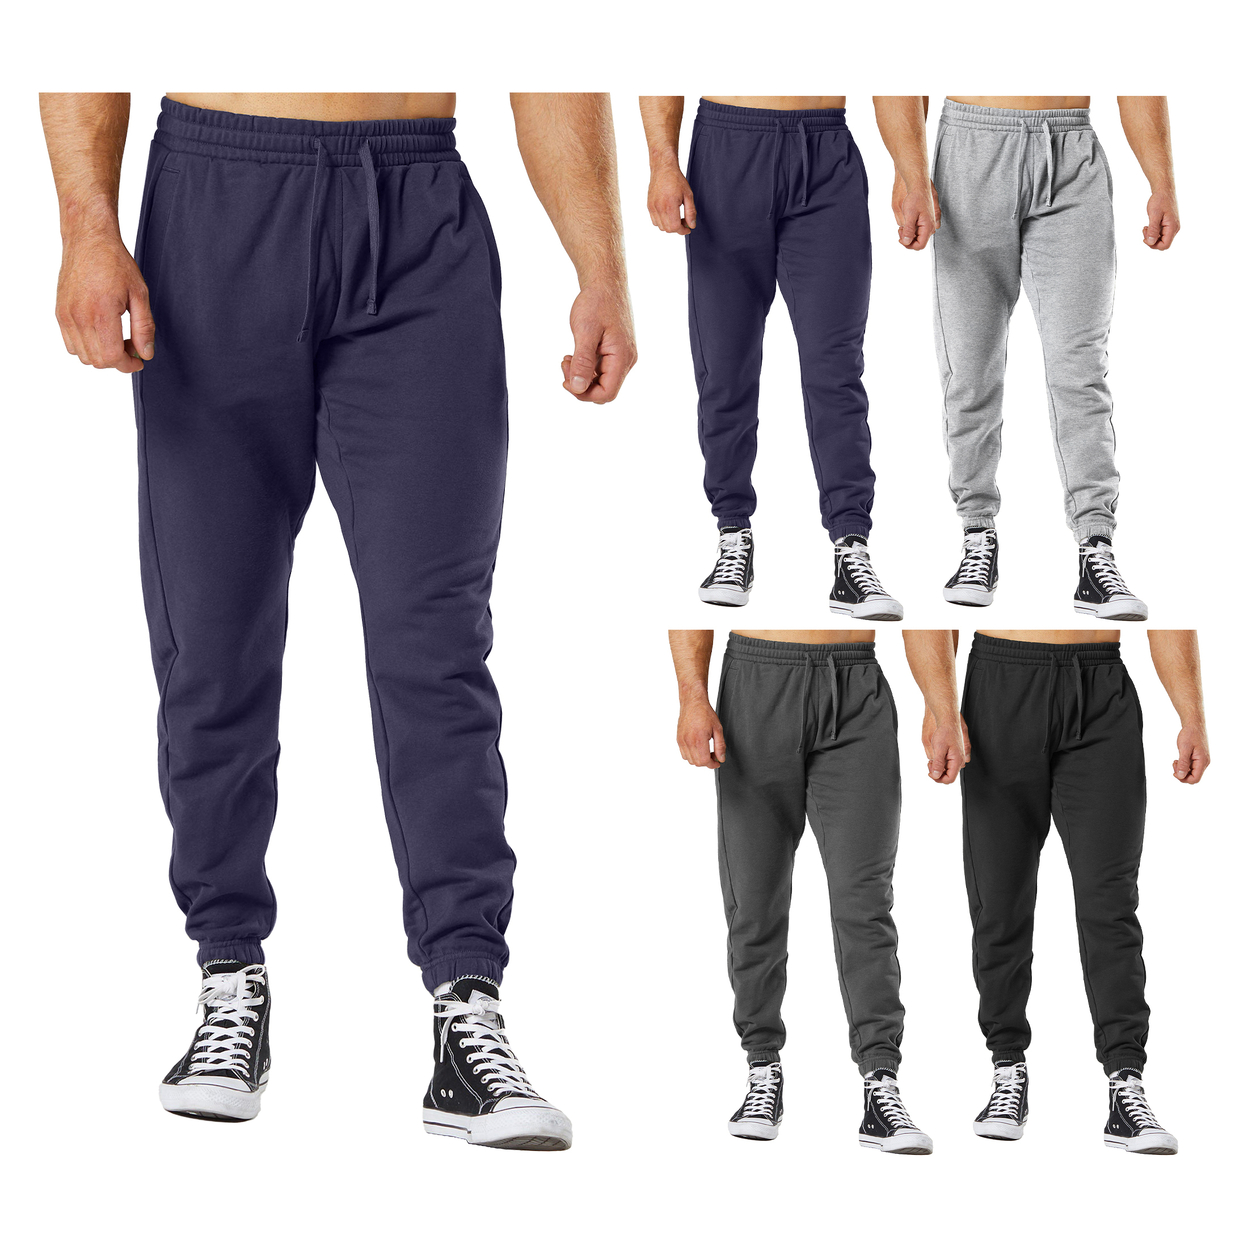 4-Pack: Men's Ultra-Soft Cozy Winter Warm Casual Fleece-Lined Sweatpants Jogger - X-large